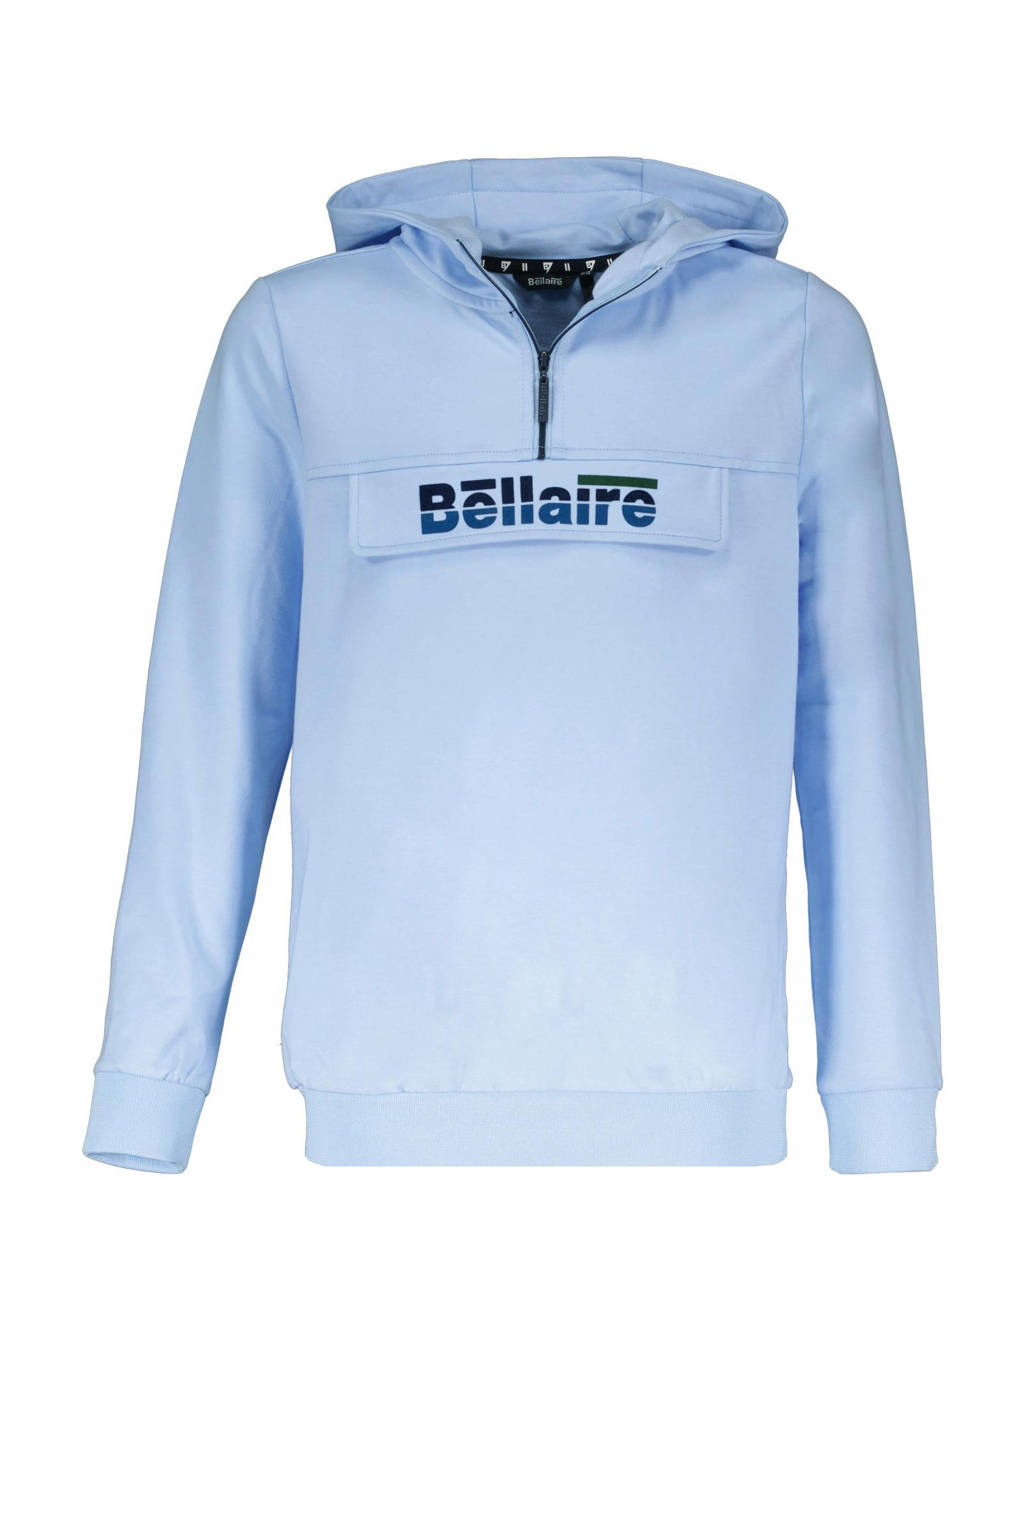 Bellaire hoodie met logo lichtblauw